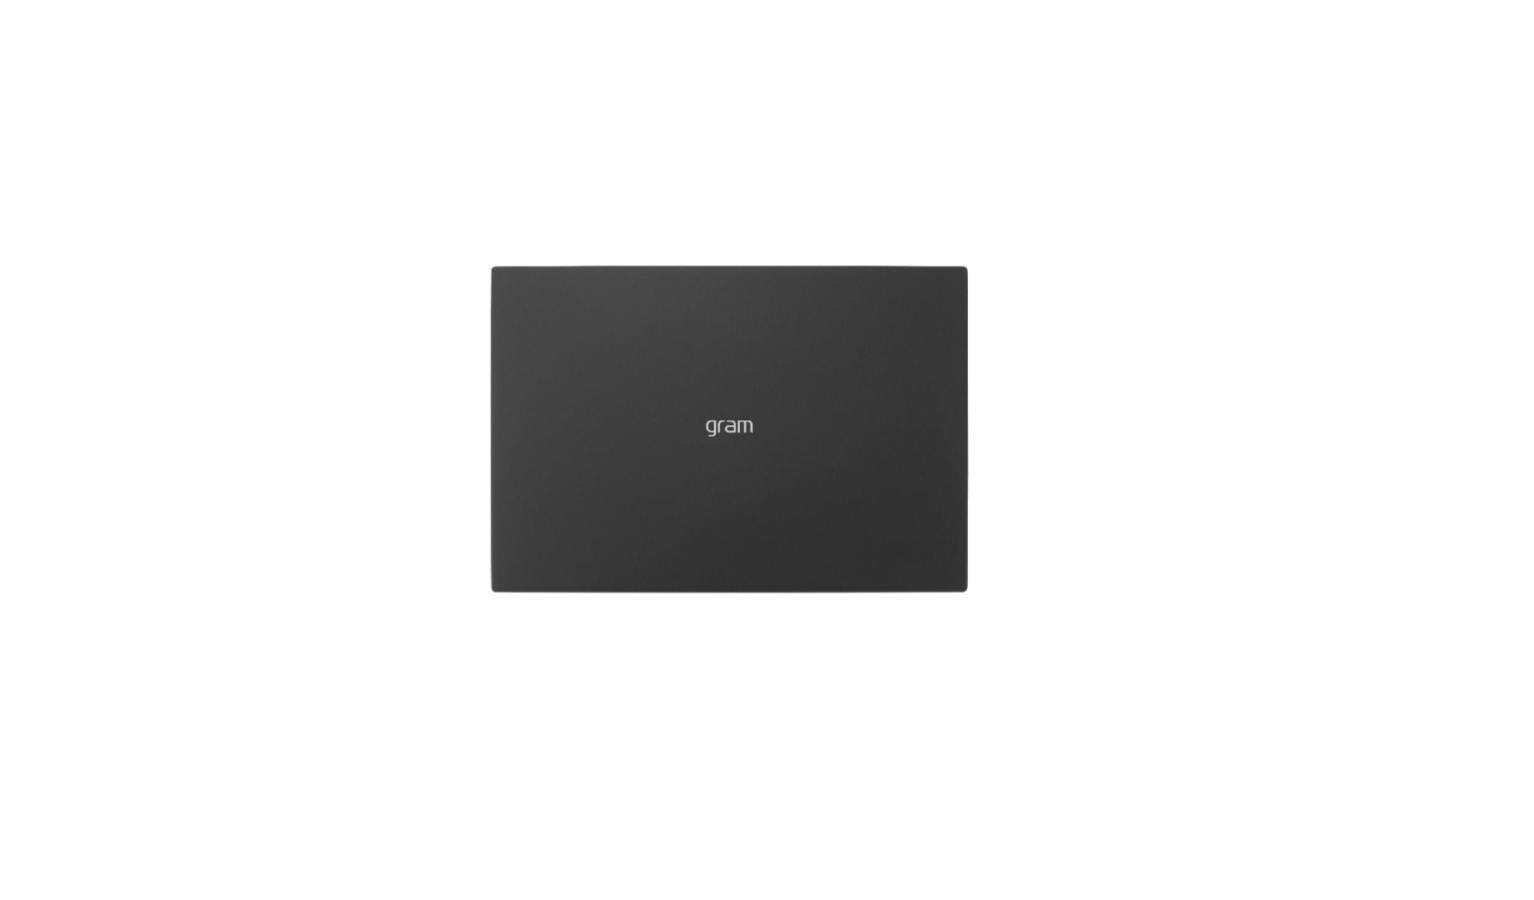 LG gram (Intel Core i5, 16GB/512GB, Windows 11) 14-inch Laptop - Black  14Z90R-G.AA55A3